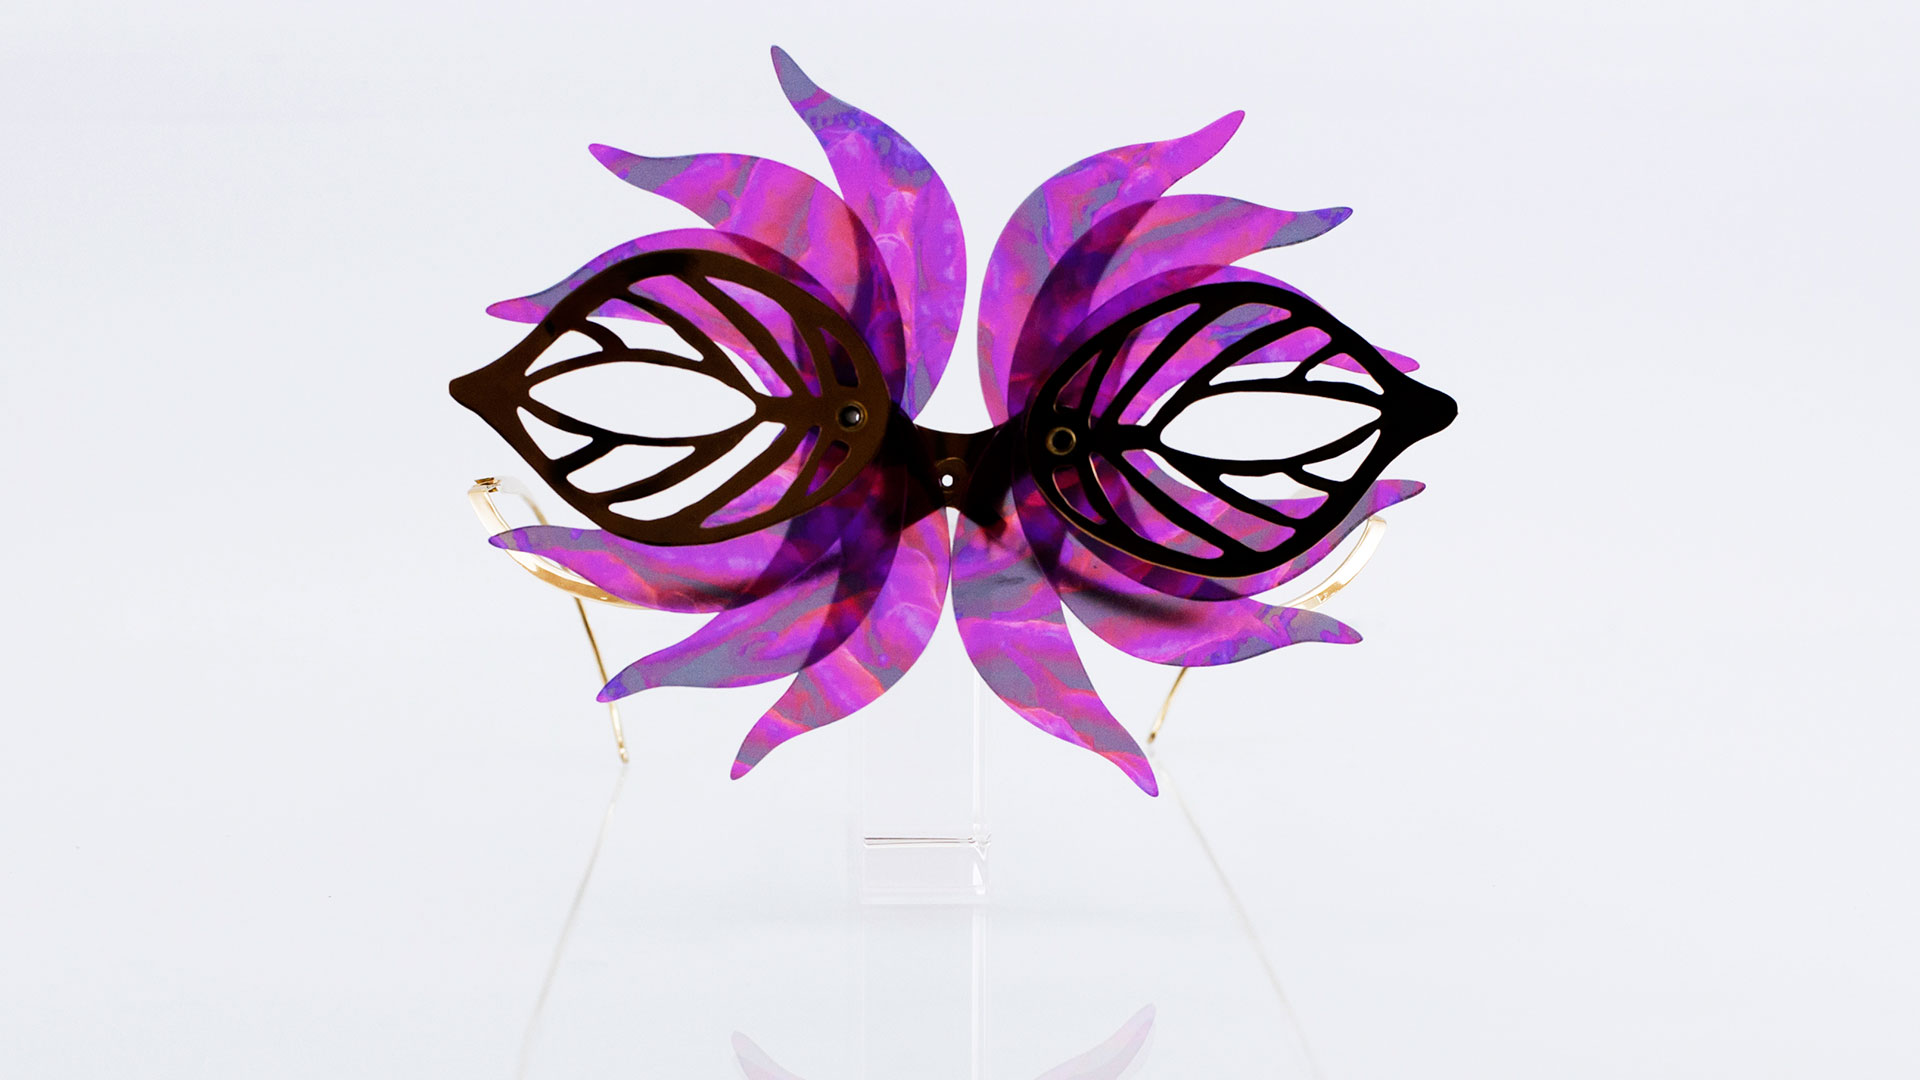 5-blooming-sonja-iglic-eyewear-googles-sunglasses-jewelry-accessories-flower-minimal-secession-kinetic-opening-folding-mechanism-designer-pink